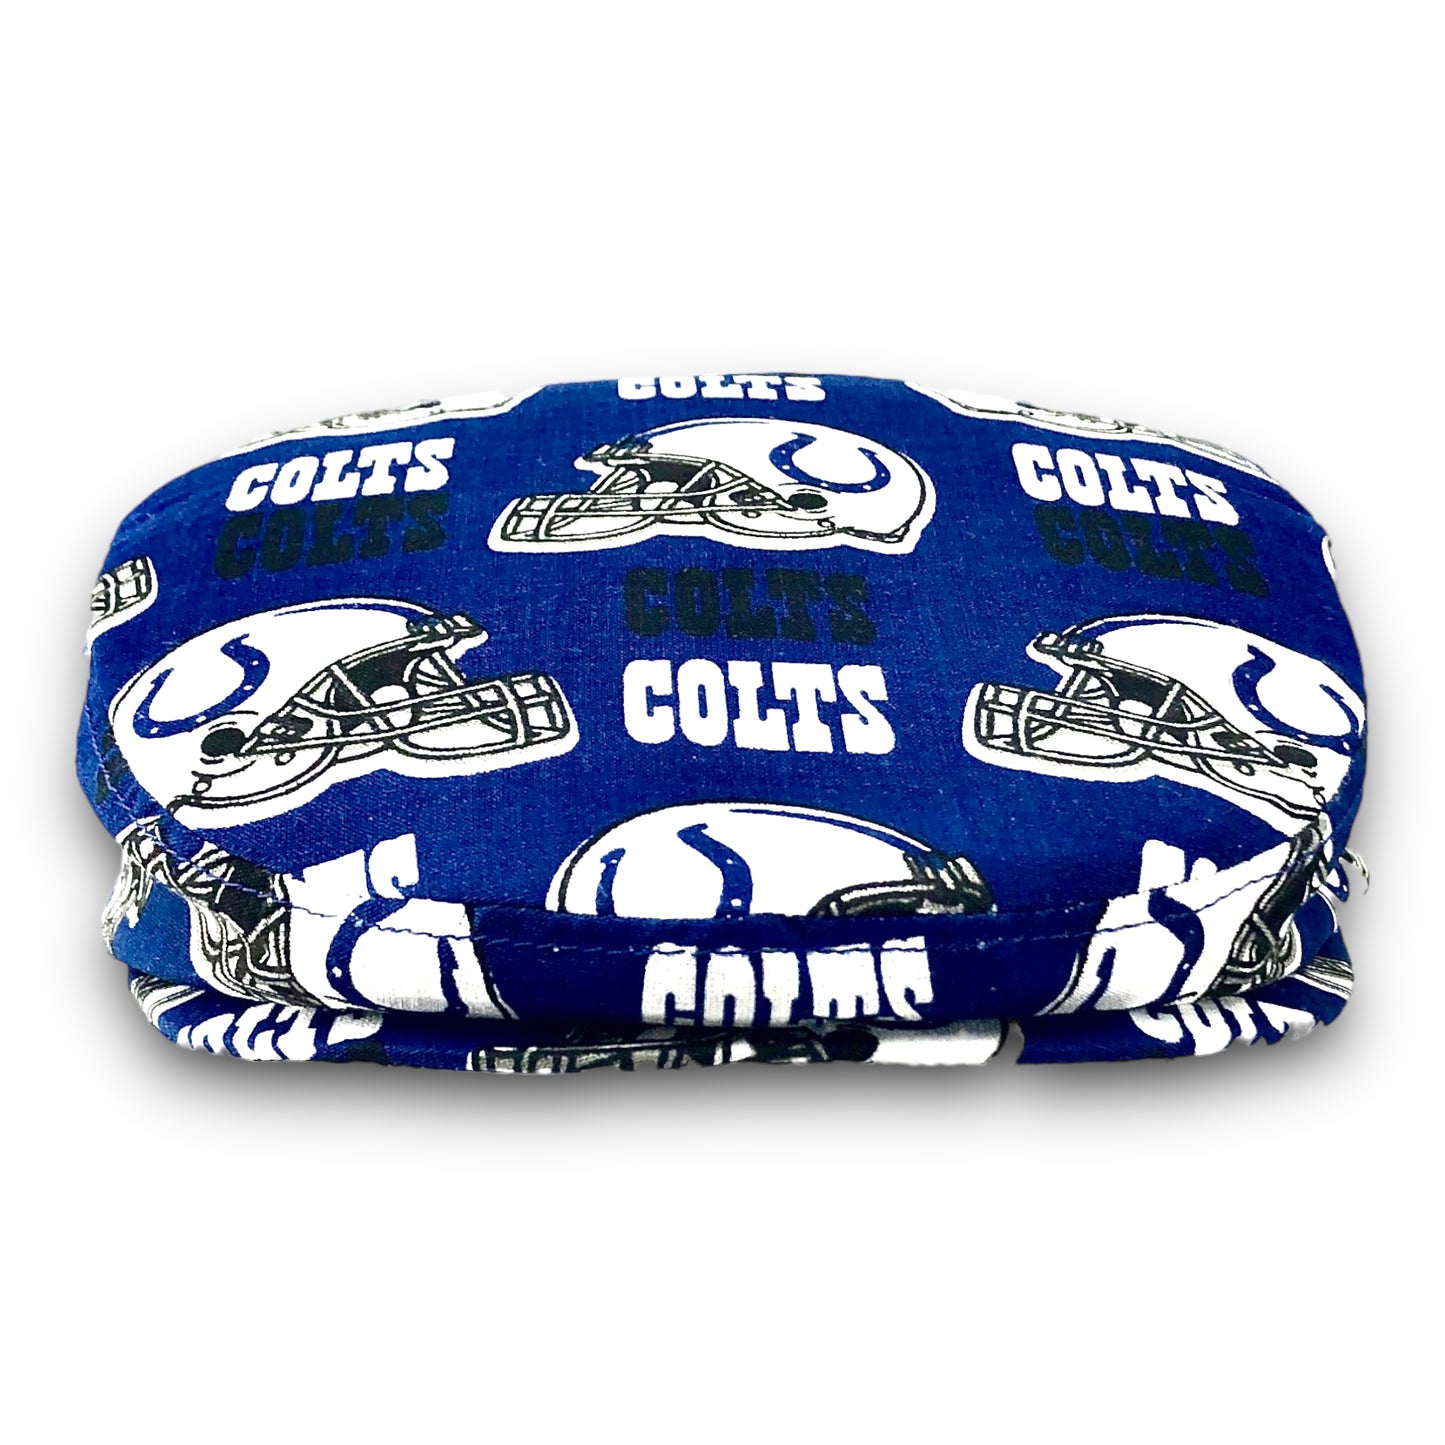 Custom Handmade Jeff Cap in Indianapolis Colts Print Fabric